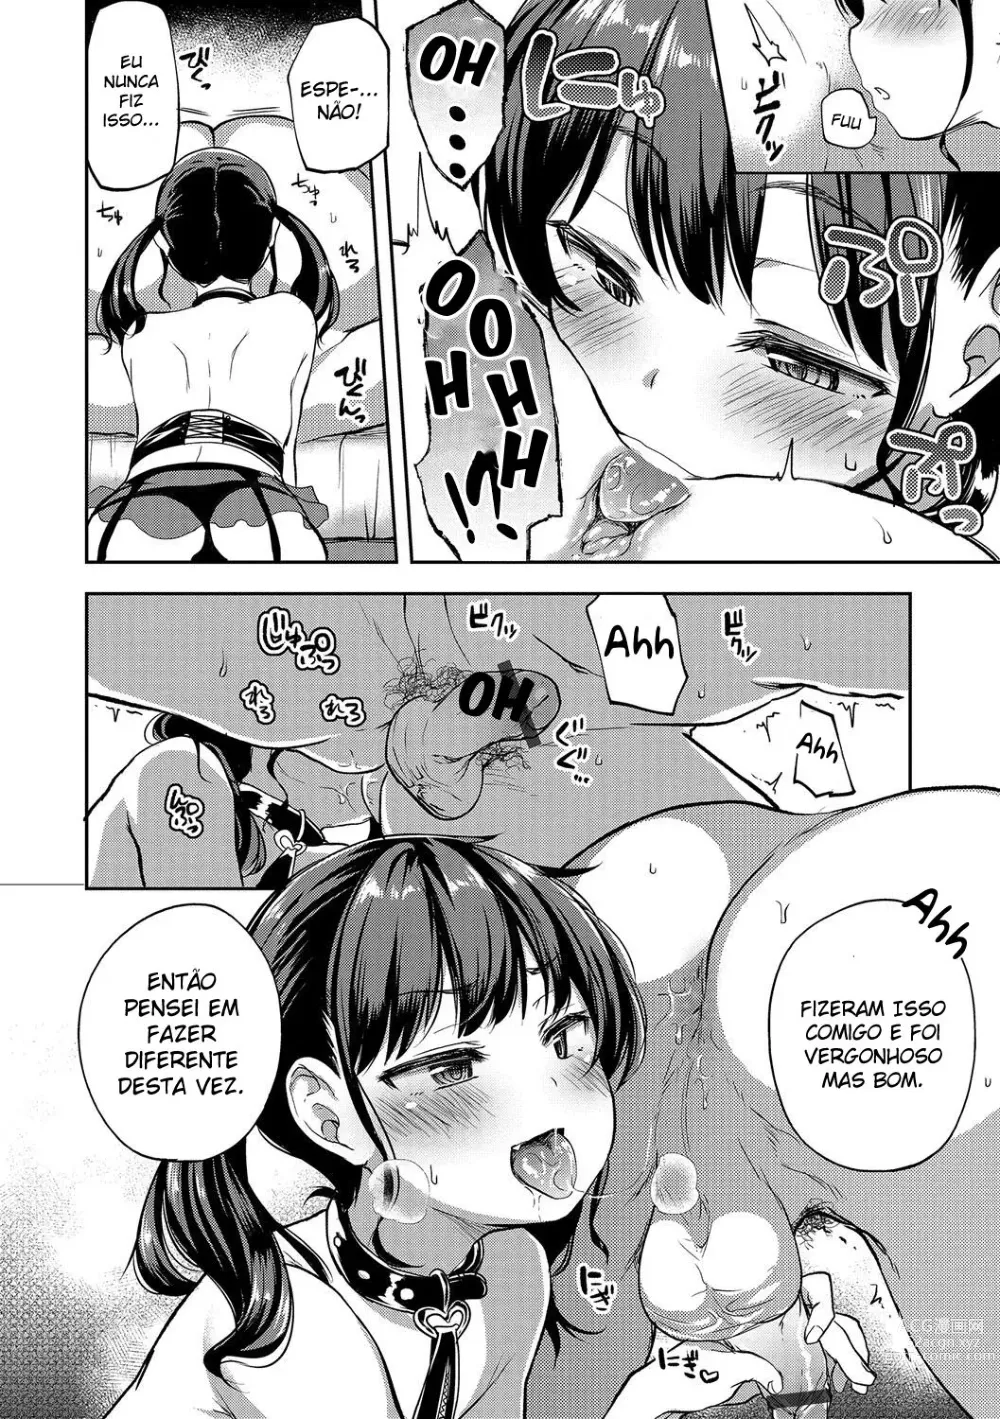 Page 6 of manga Ore ga Ichiban Aishiteru!